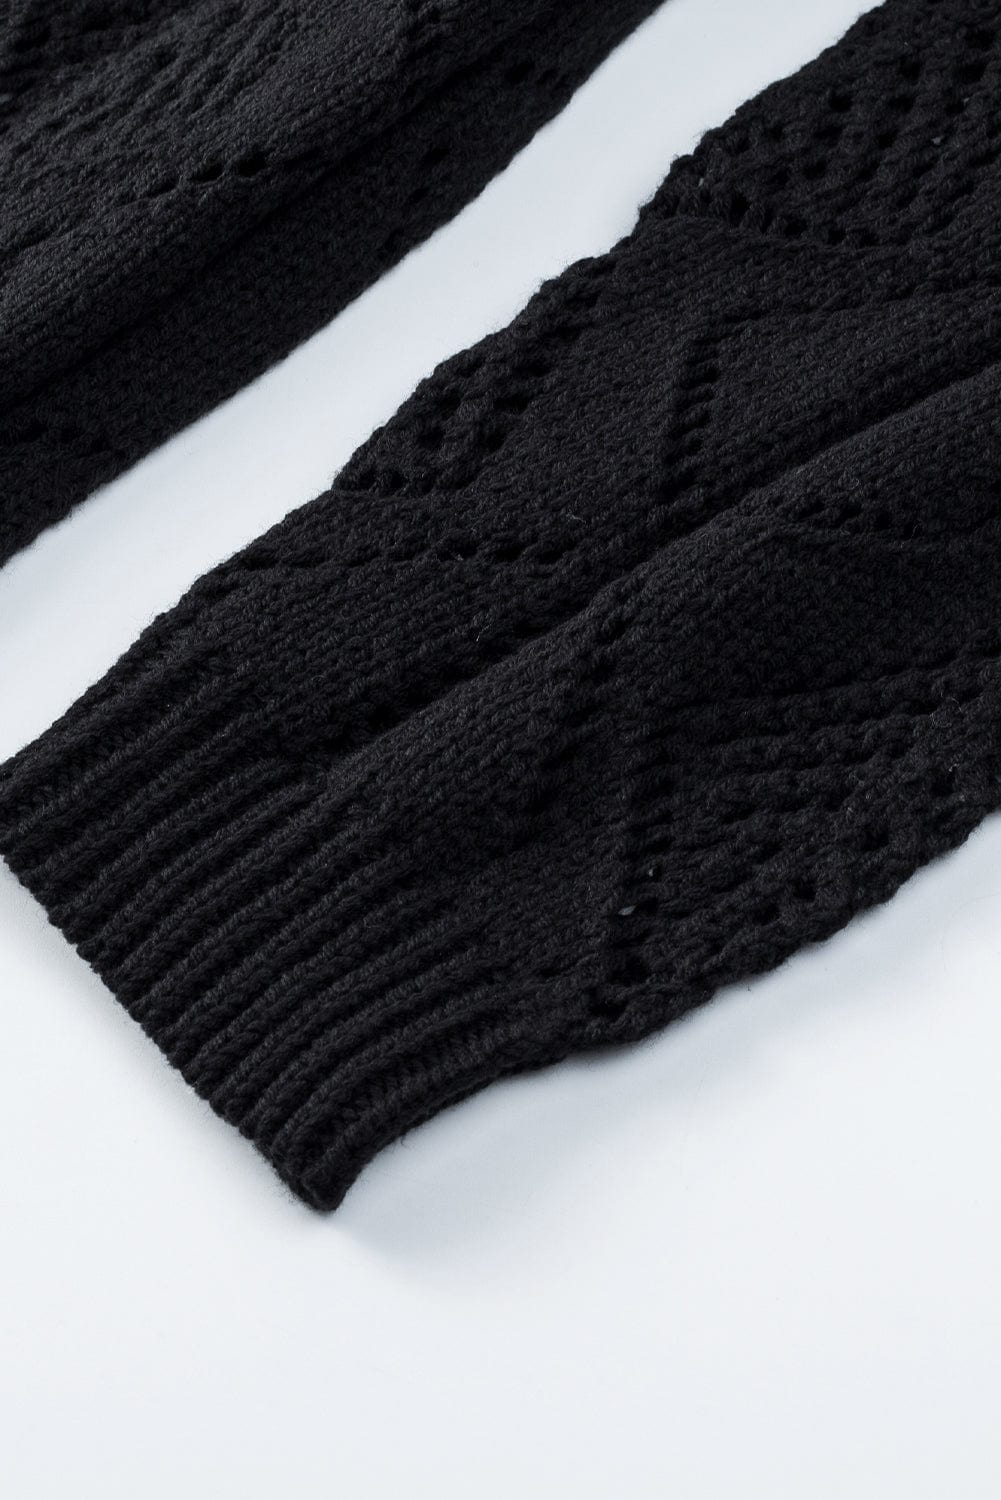 The802Gypsy  sweaters TRAVELING GYPSY-Khaki Knit Cardigan